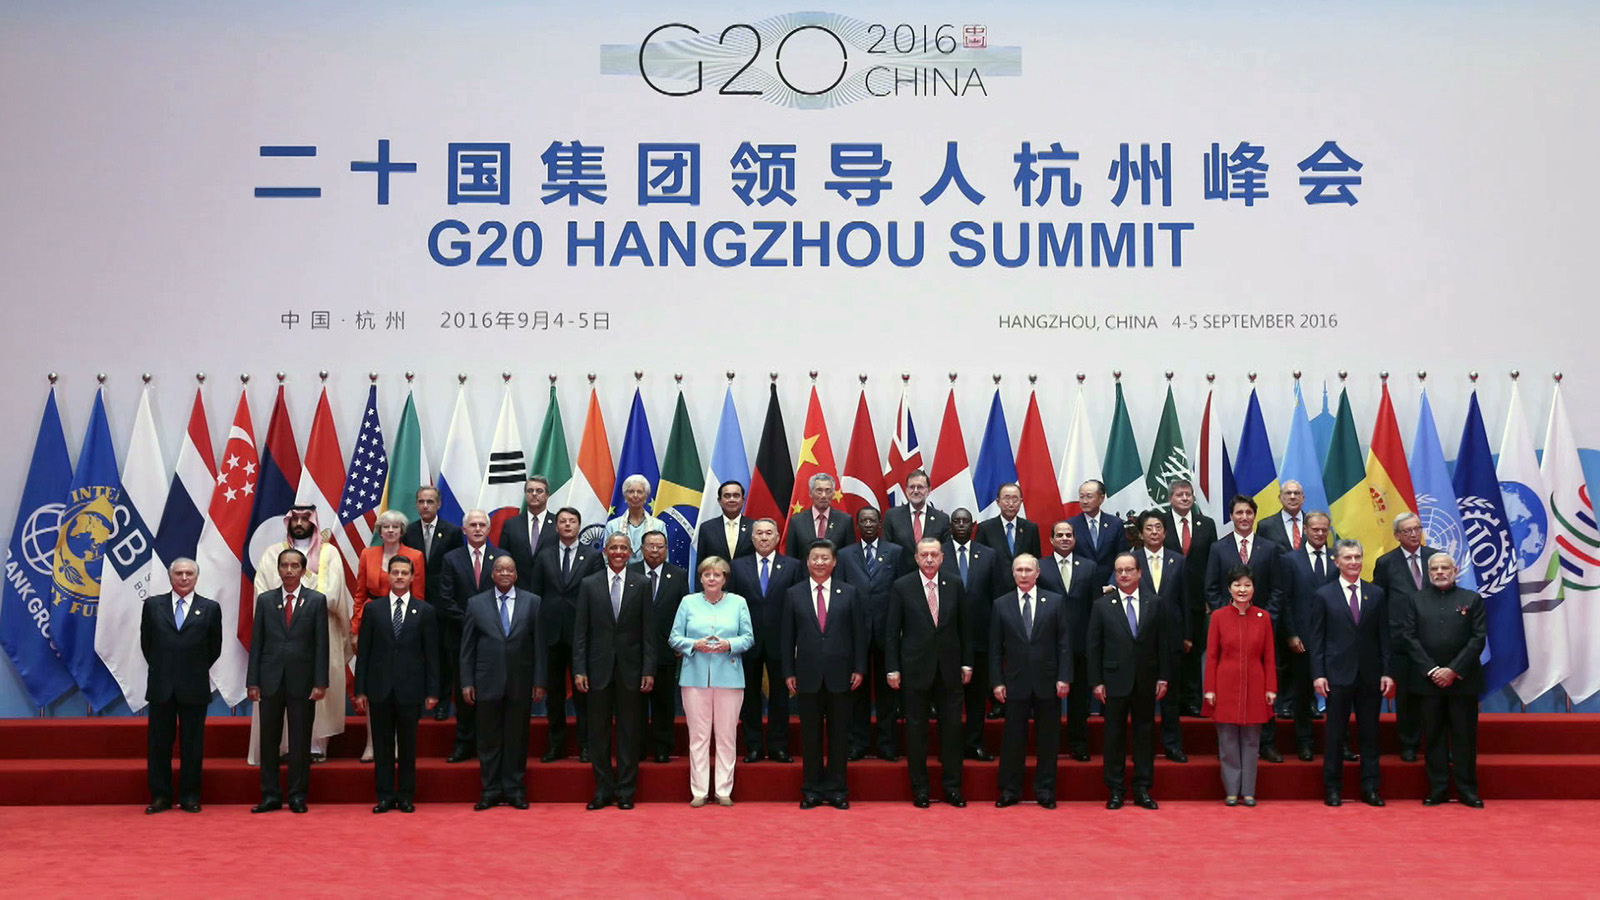 http://www.net4info.de/photos/cpg/albums/userpics/10002/2016_g20_hangzhou_summit.jpg